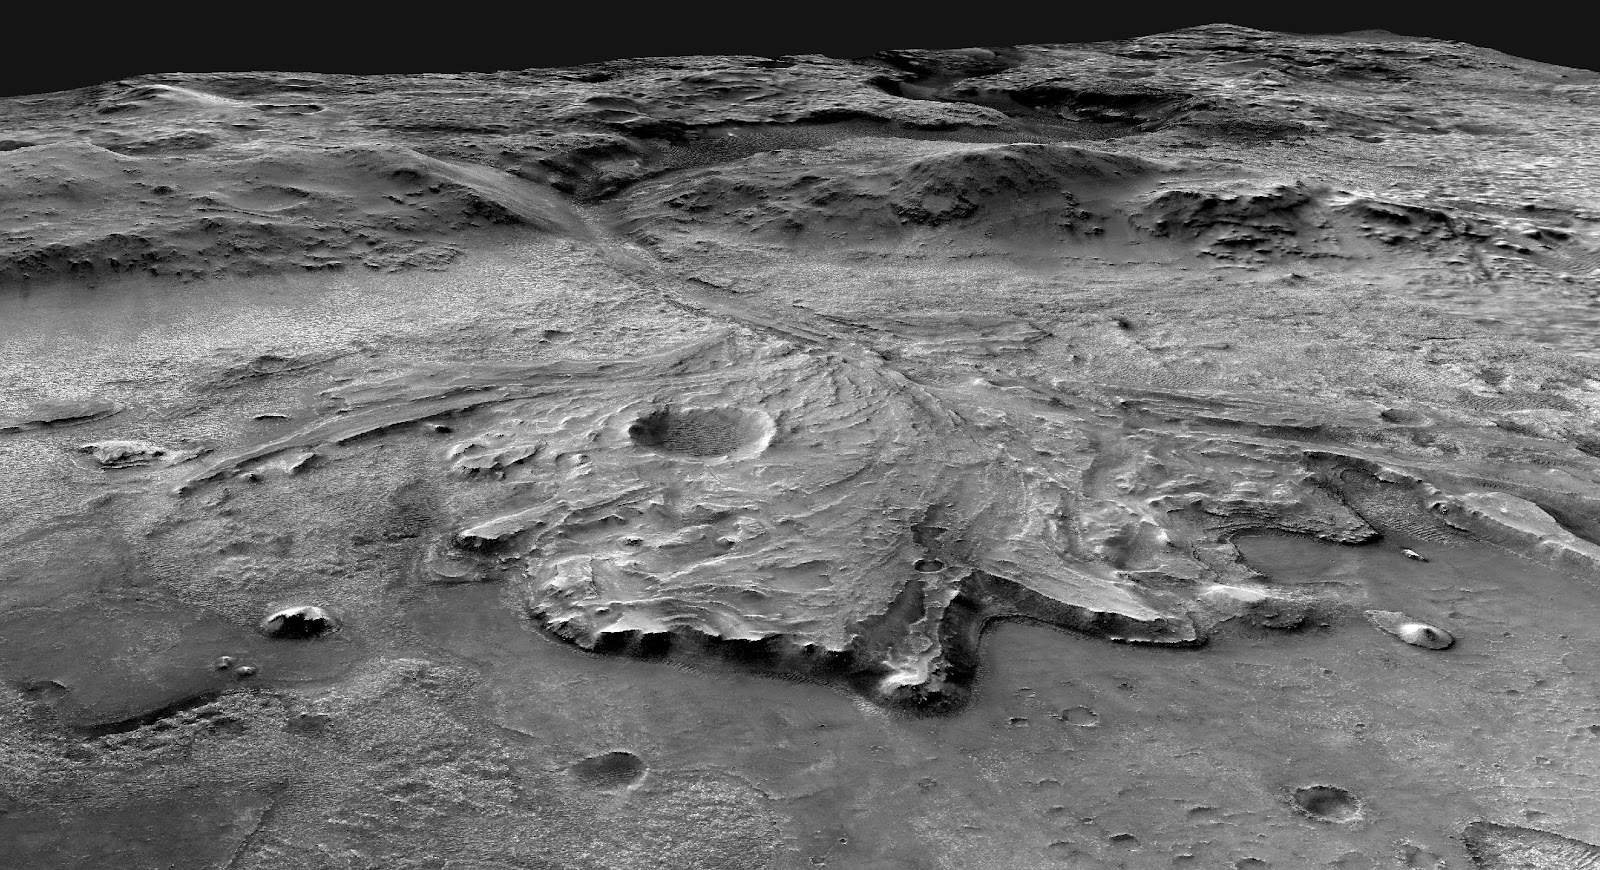 Jezero crater, Mars | U.S. Geological Survey